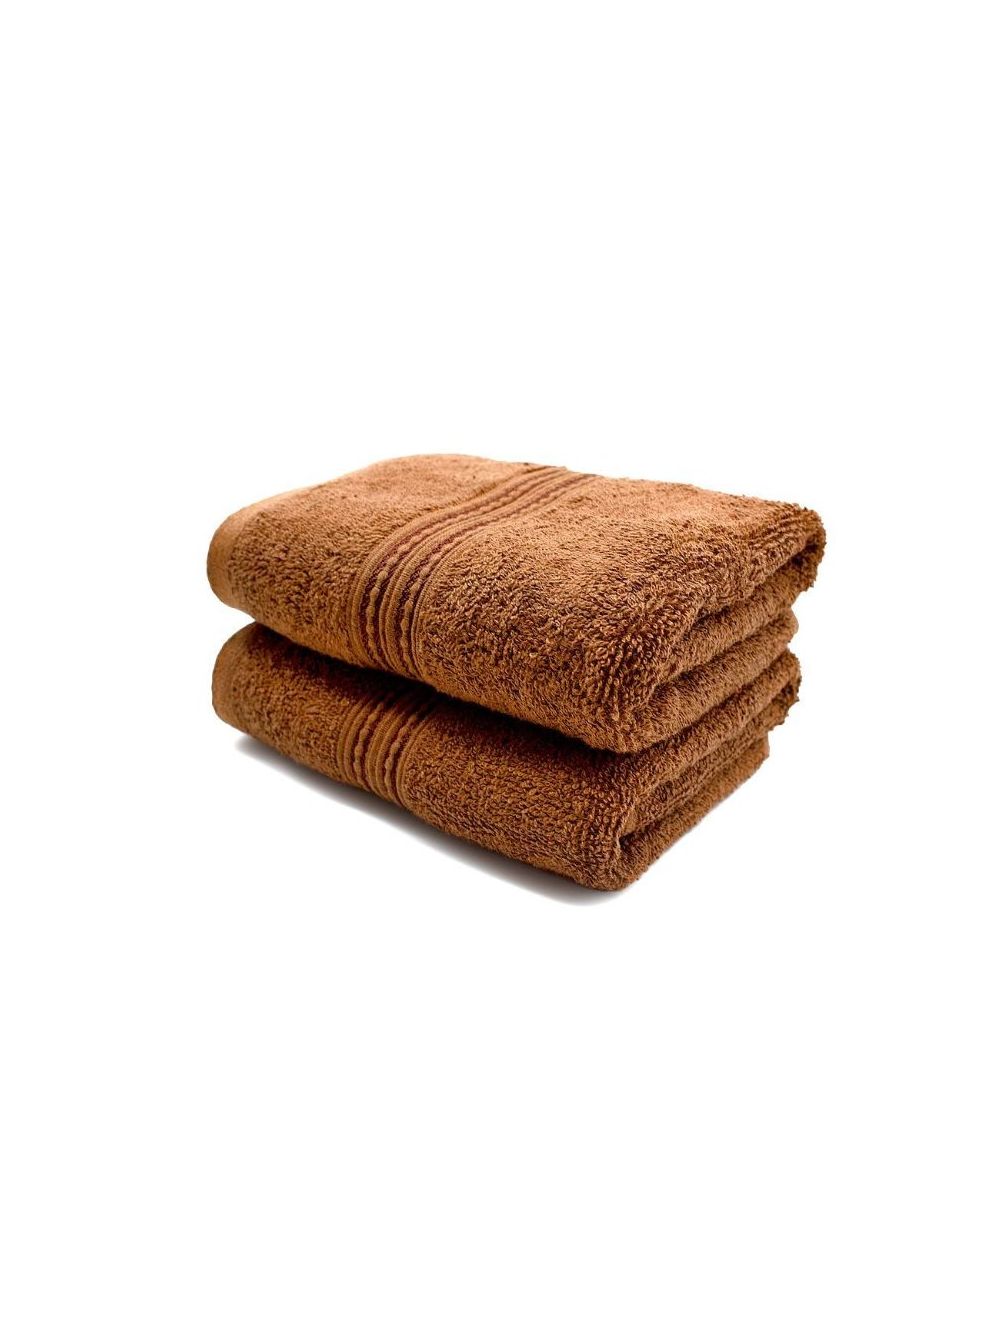 Rahalife 100% Cotton 2-Piece Hand Towel Set, Classic Collection, Brown-14RLHT023